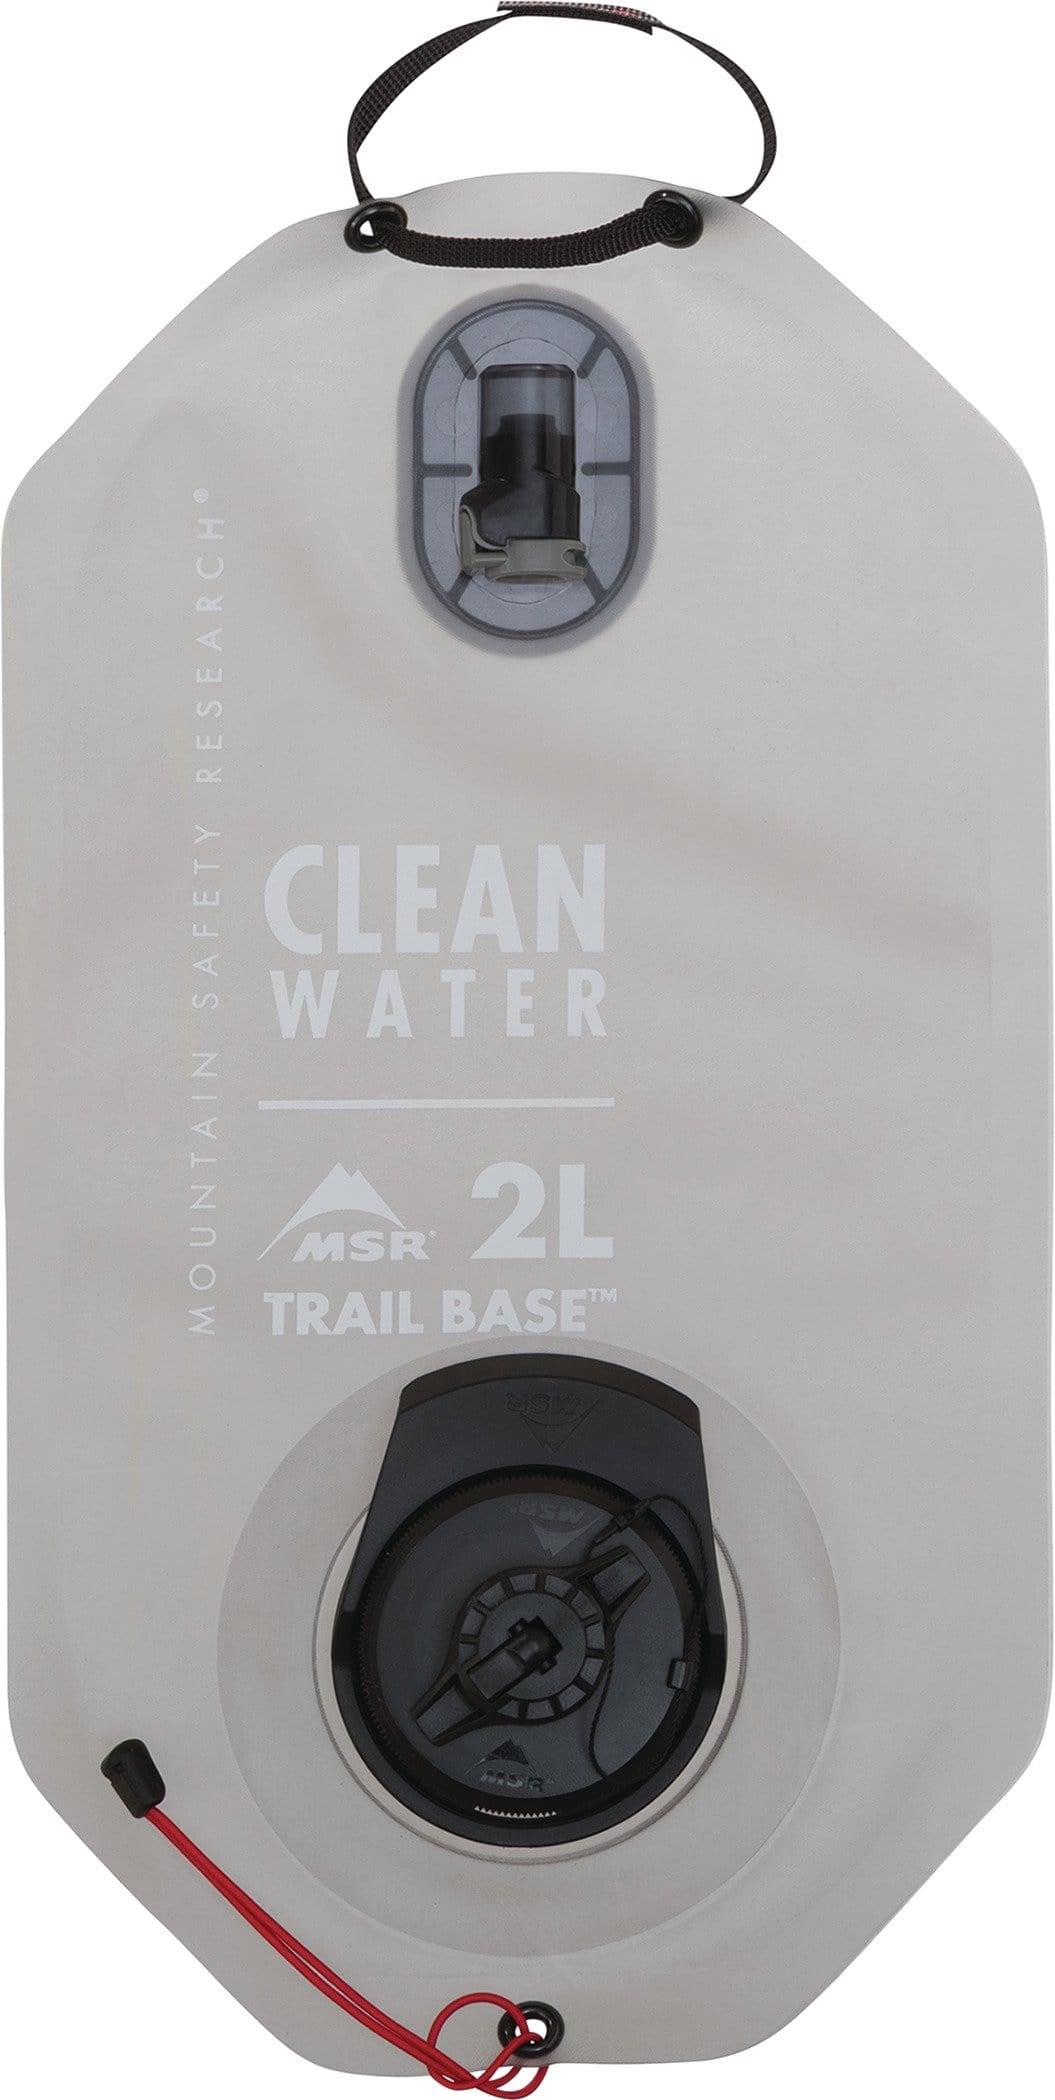 MSR Trail Base 2L Water Filter Kit